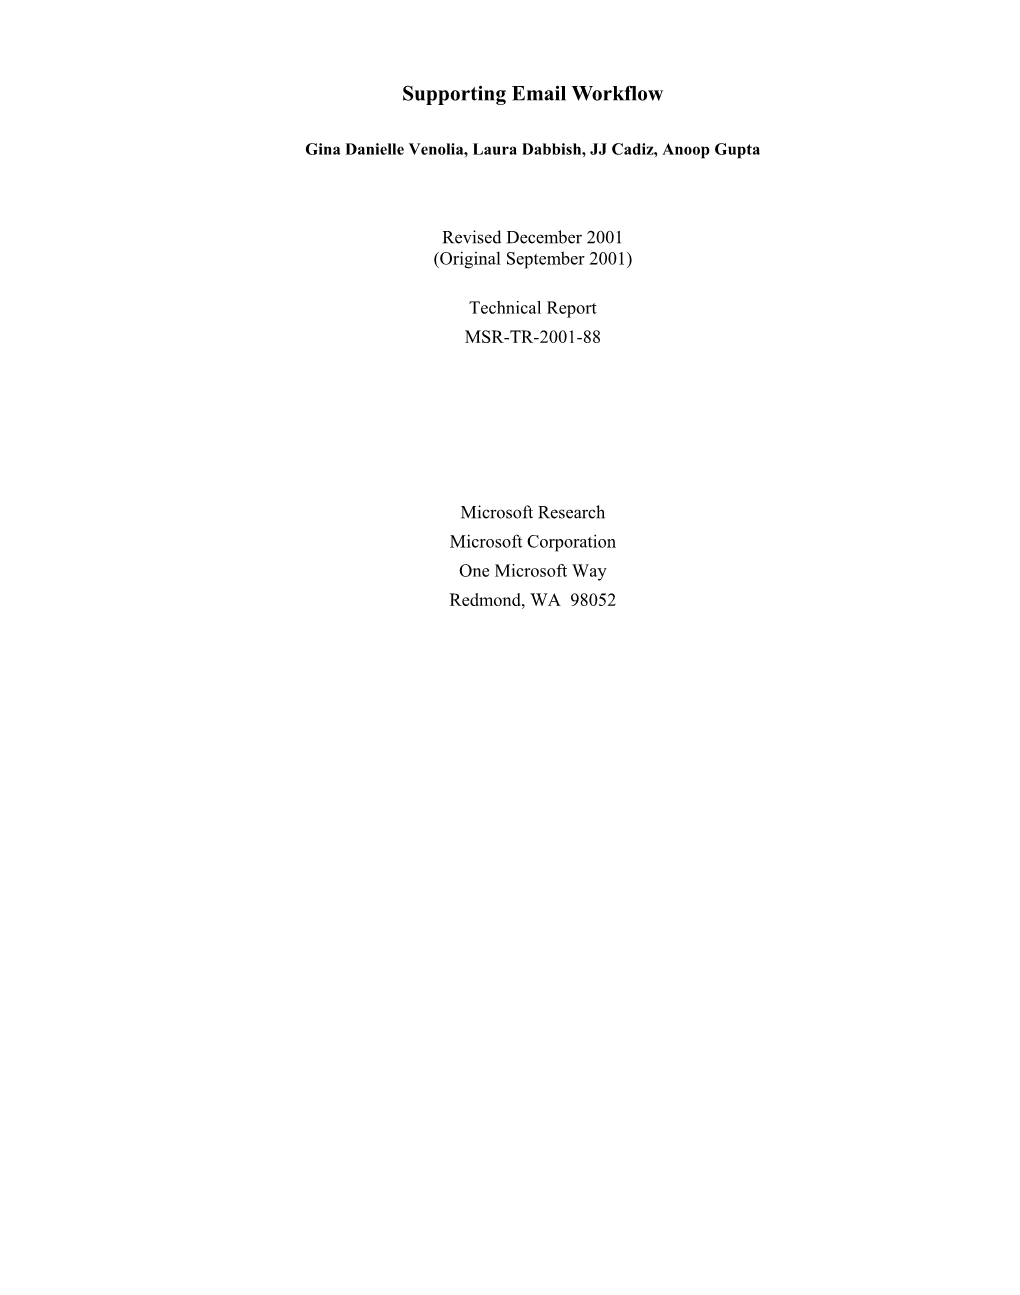 DIS2002 Conference Publication Format